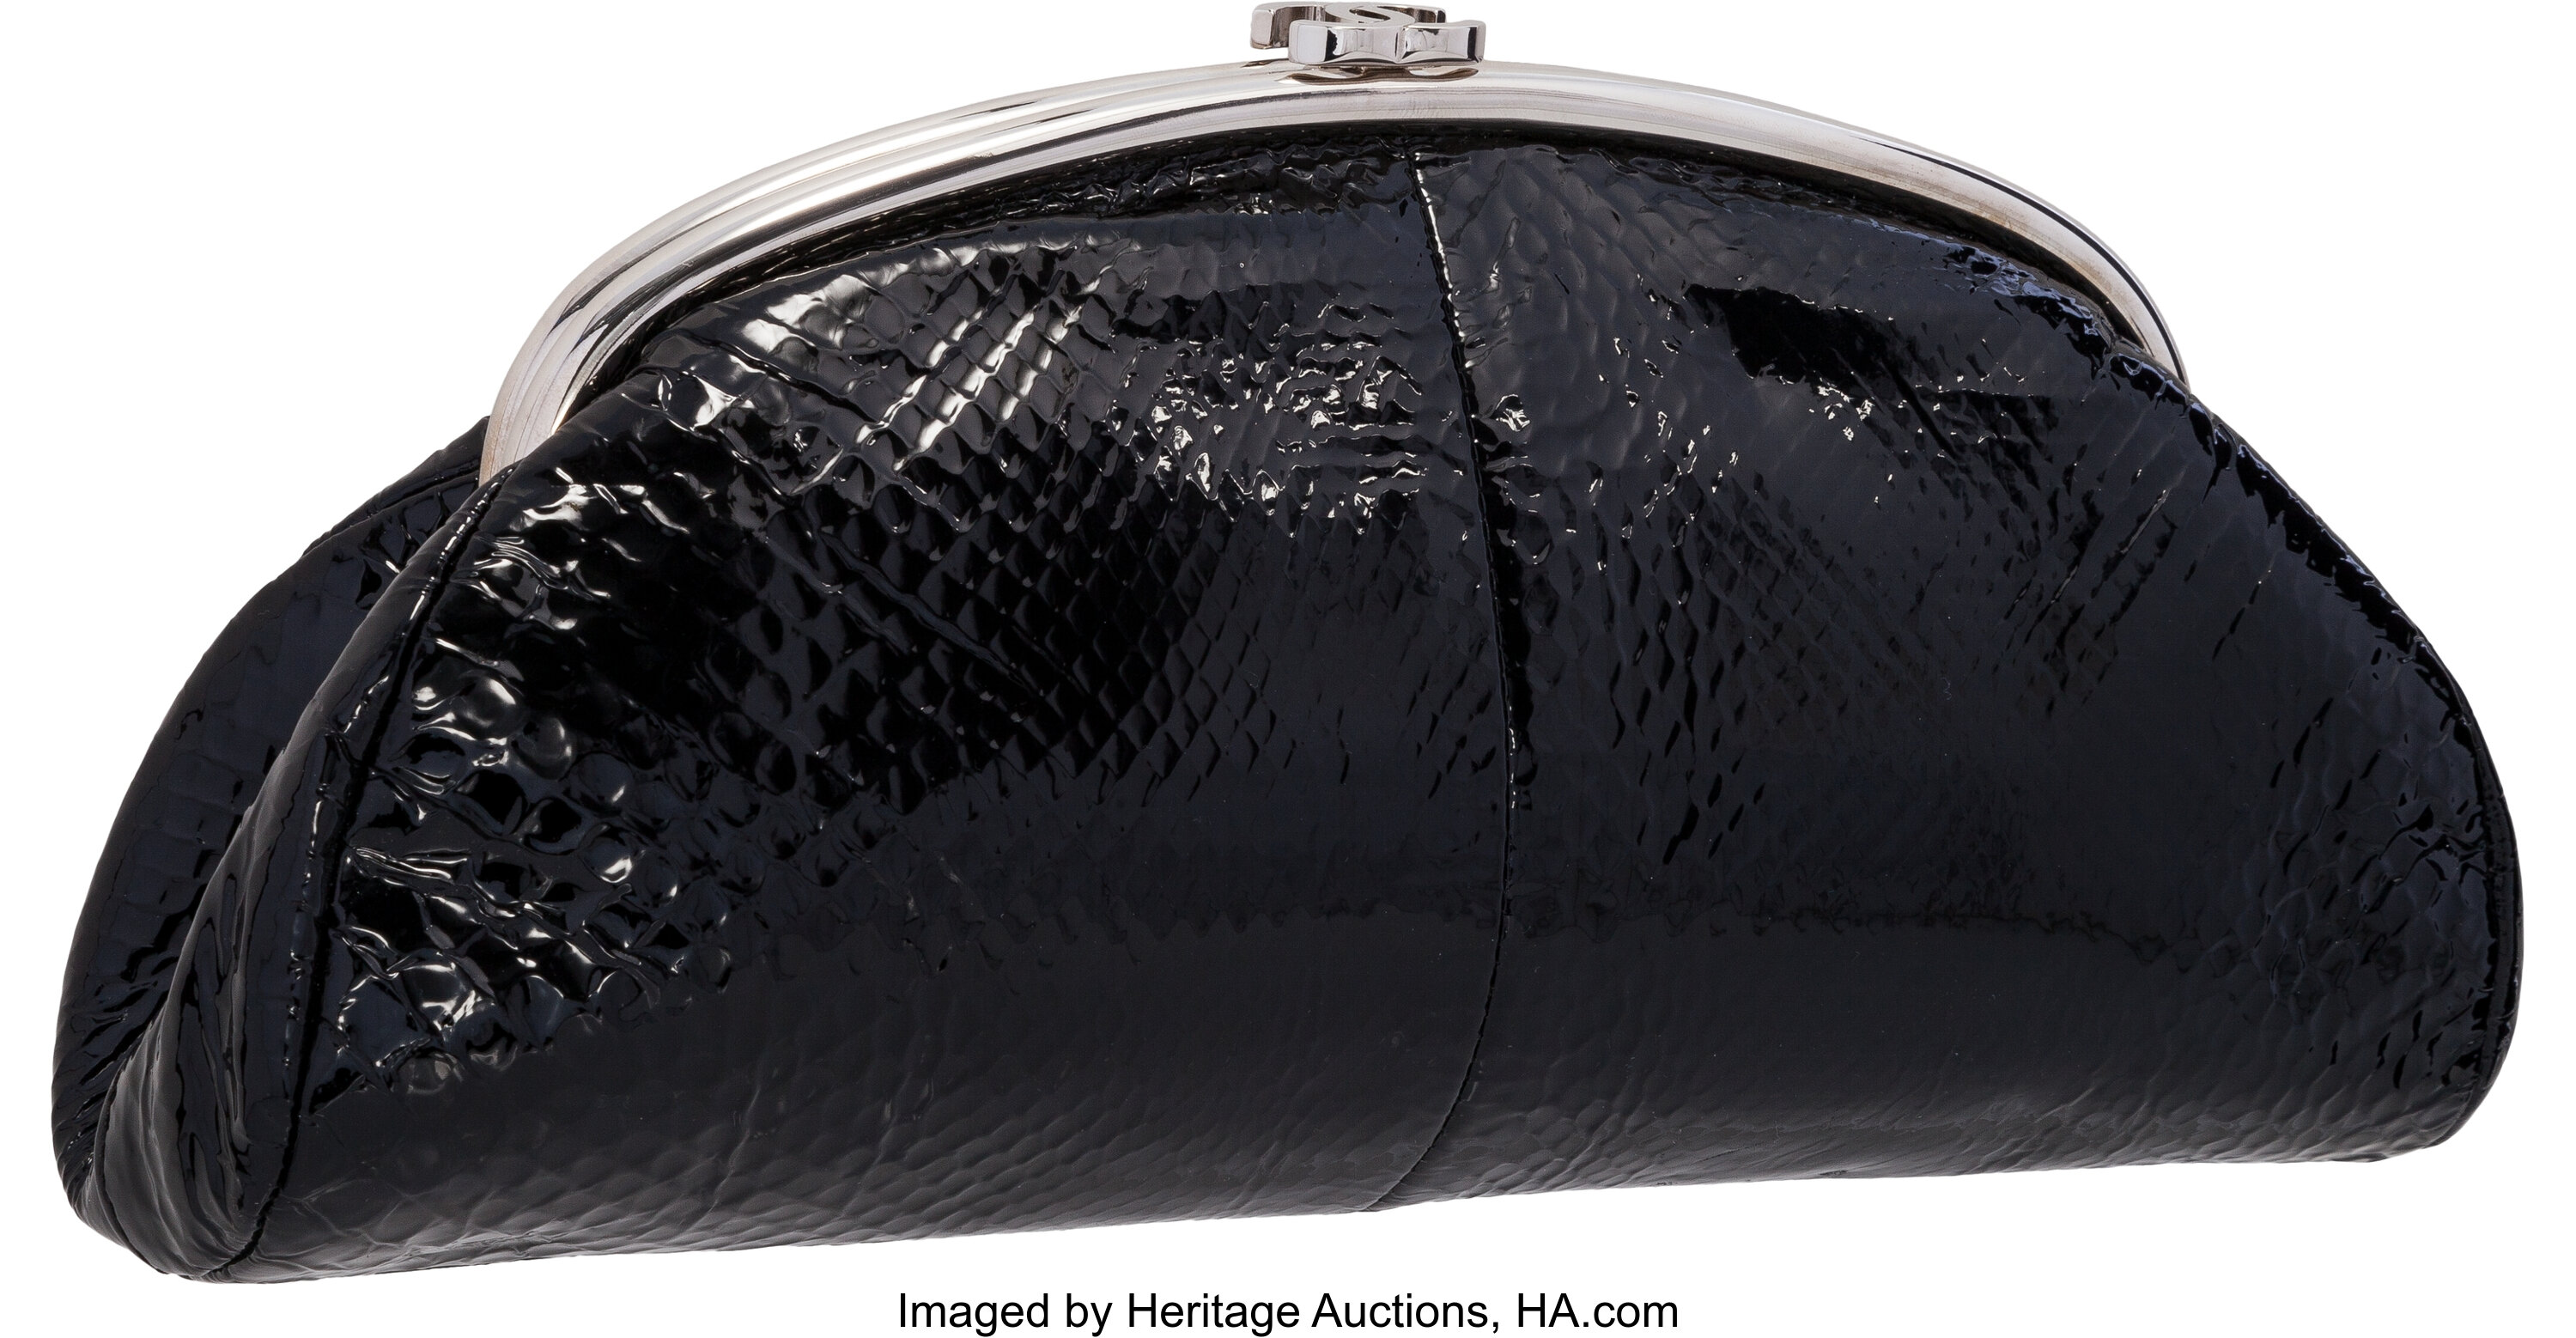 Chanel Black Patent Python Timeless Clutch Bag. Excellent